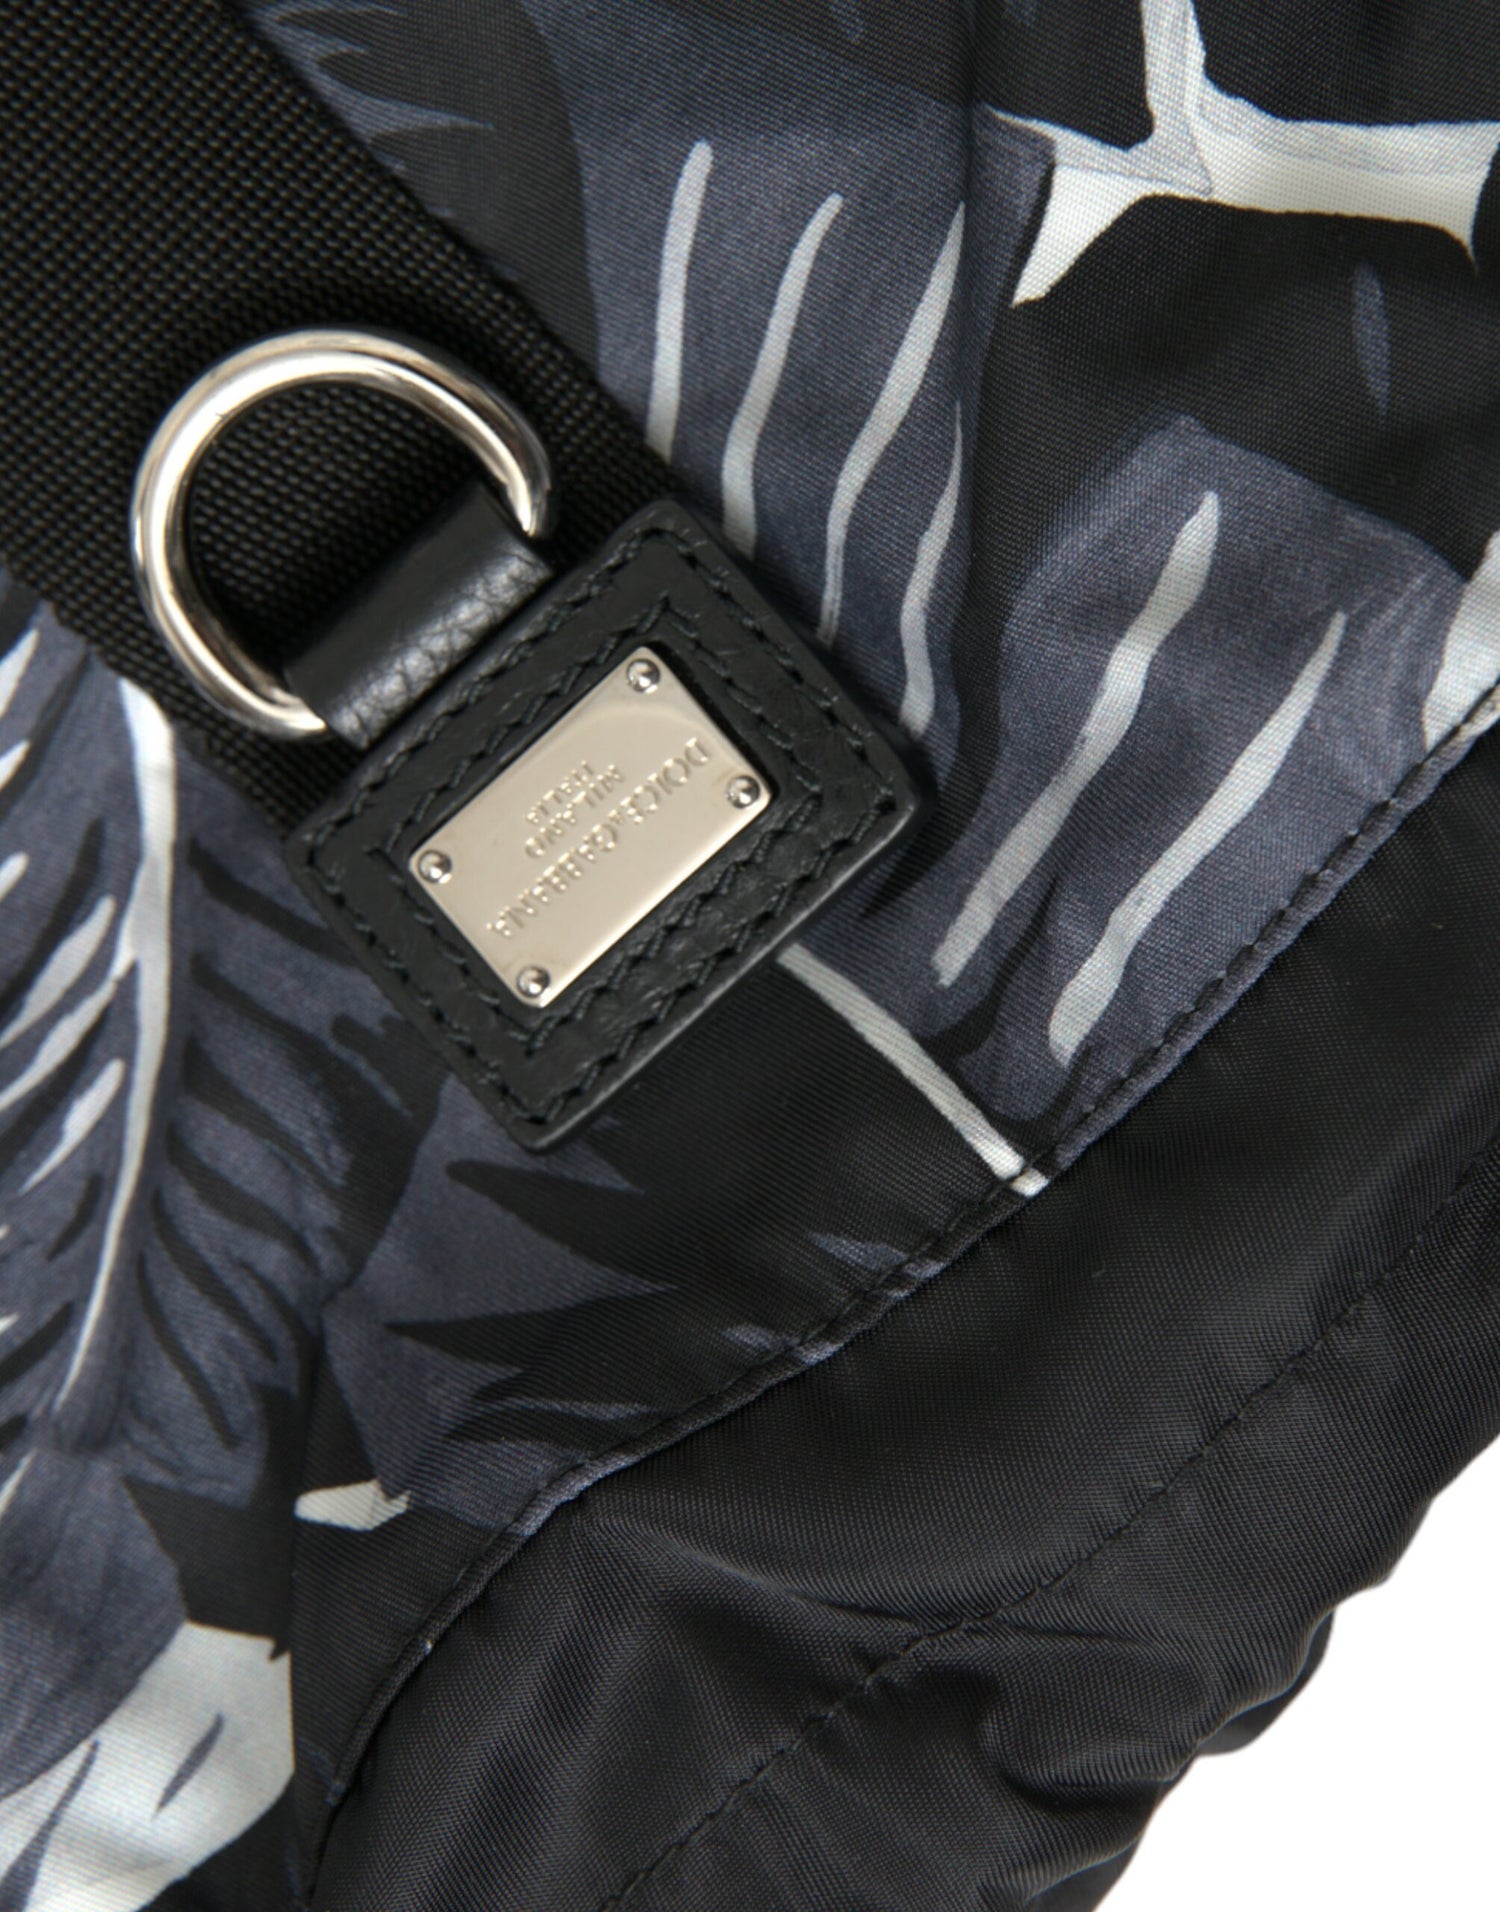 Dolce & Gabbana Black Leaf Print Adjustable Drawstring Nap Sack Bag - DEA STILOSA MILANO